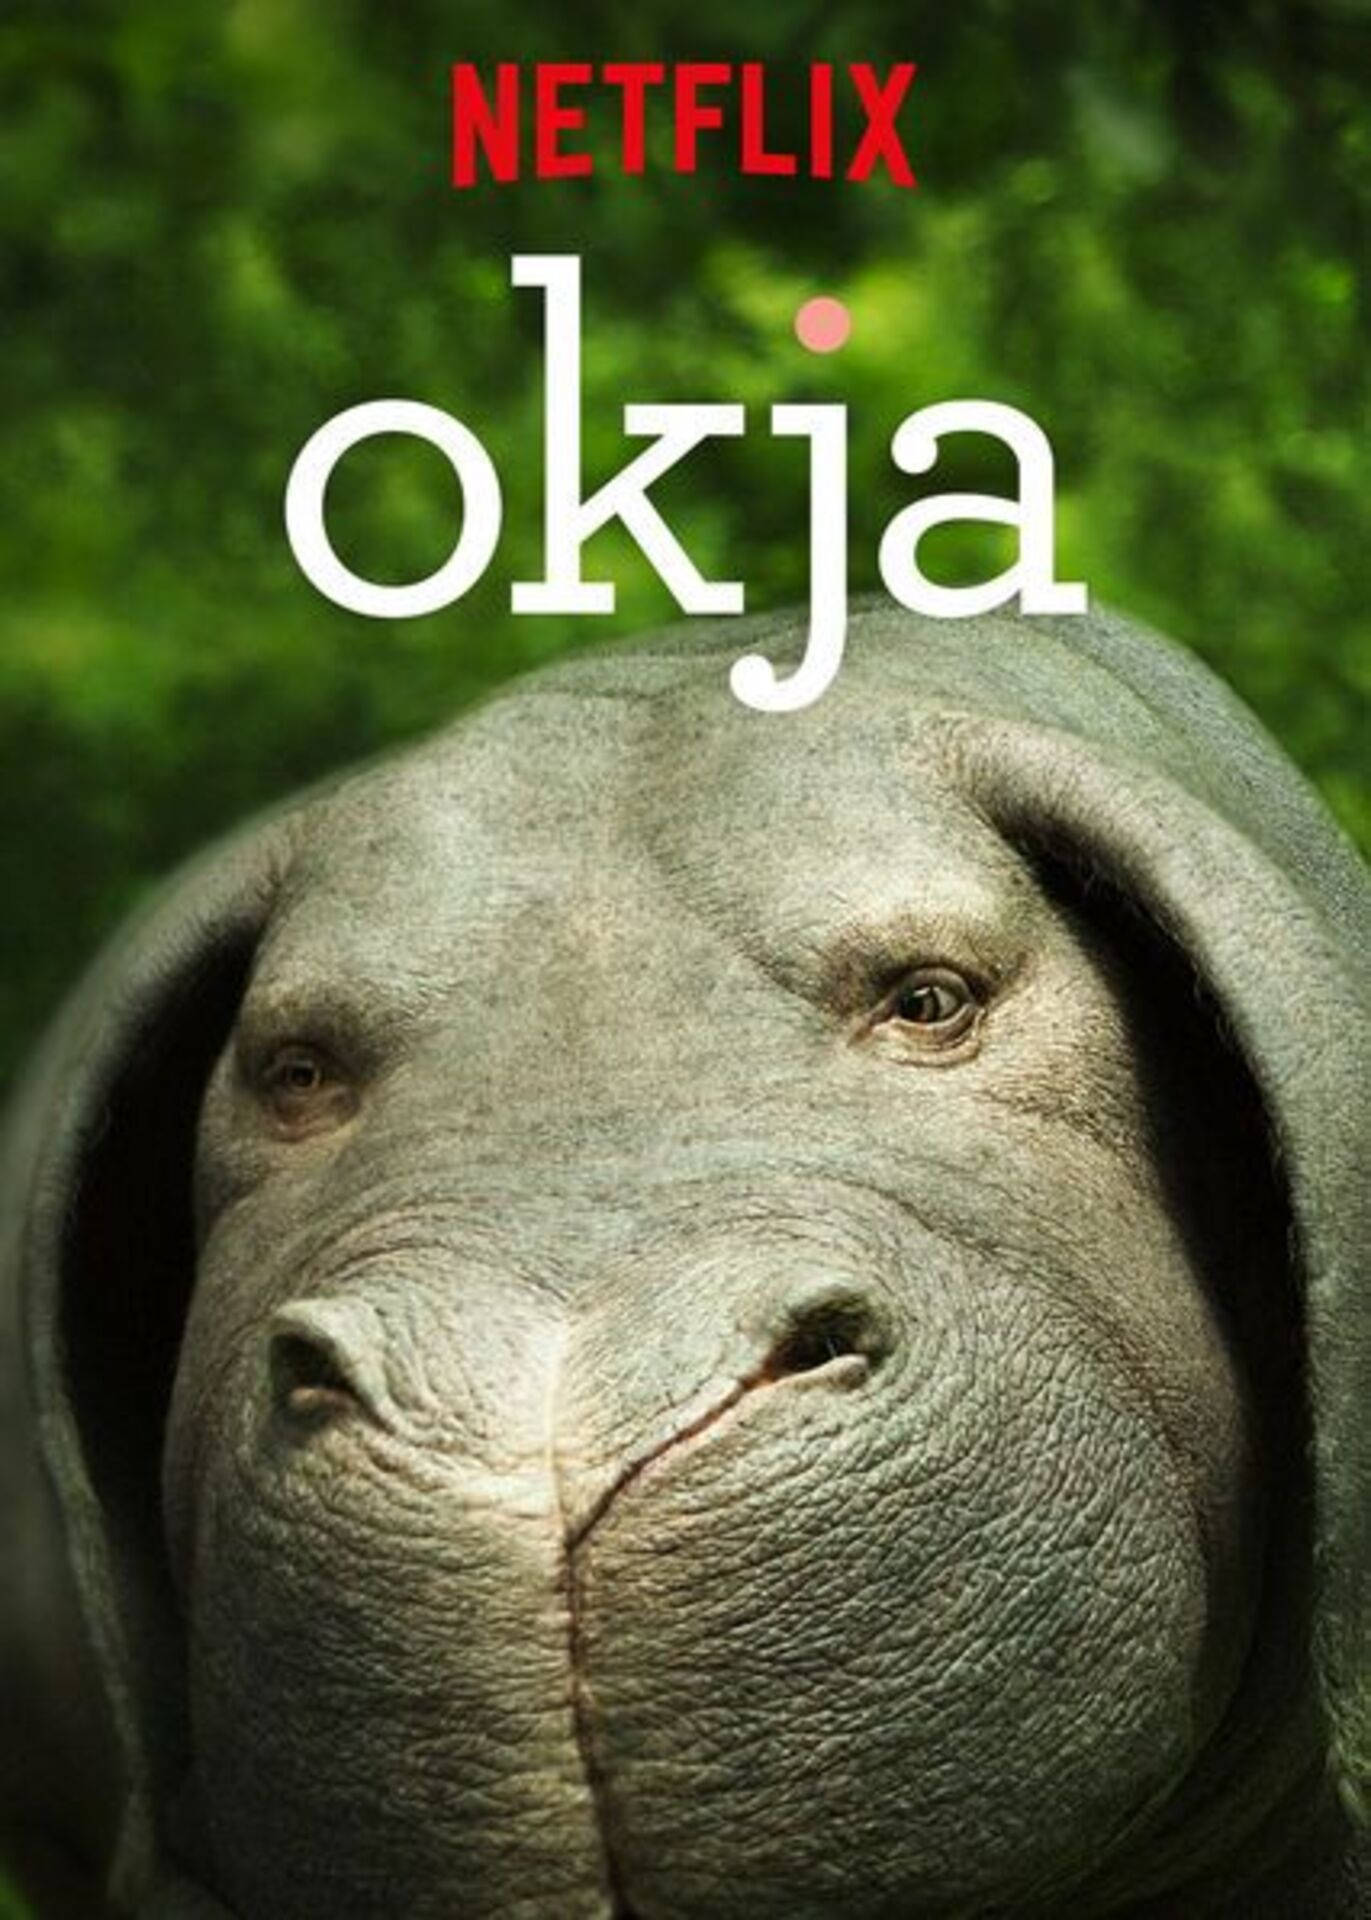 Netflix Super Pig Okja Background